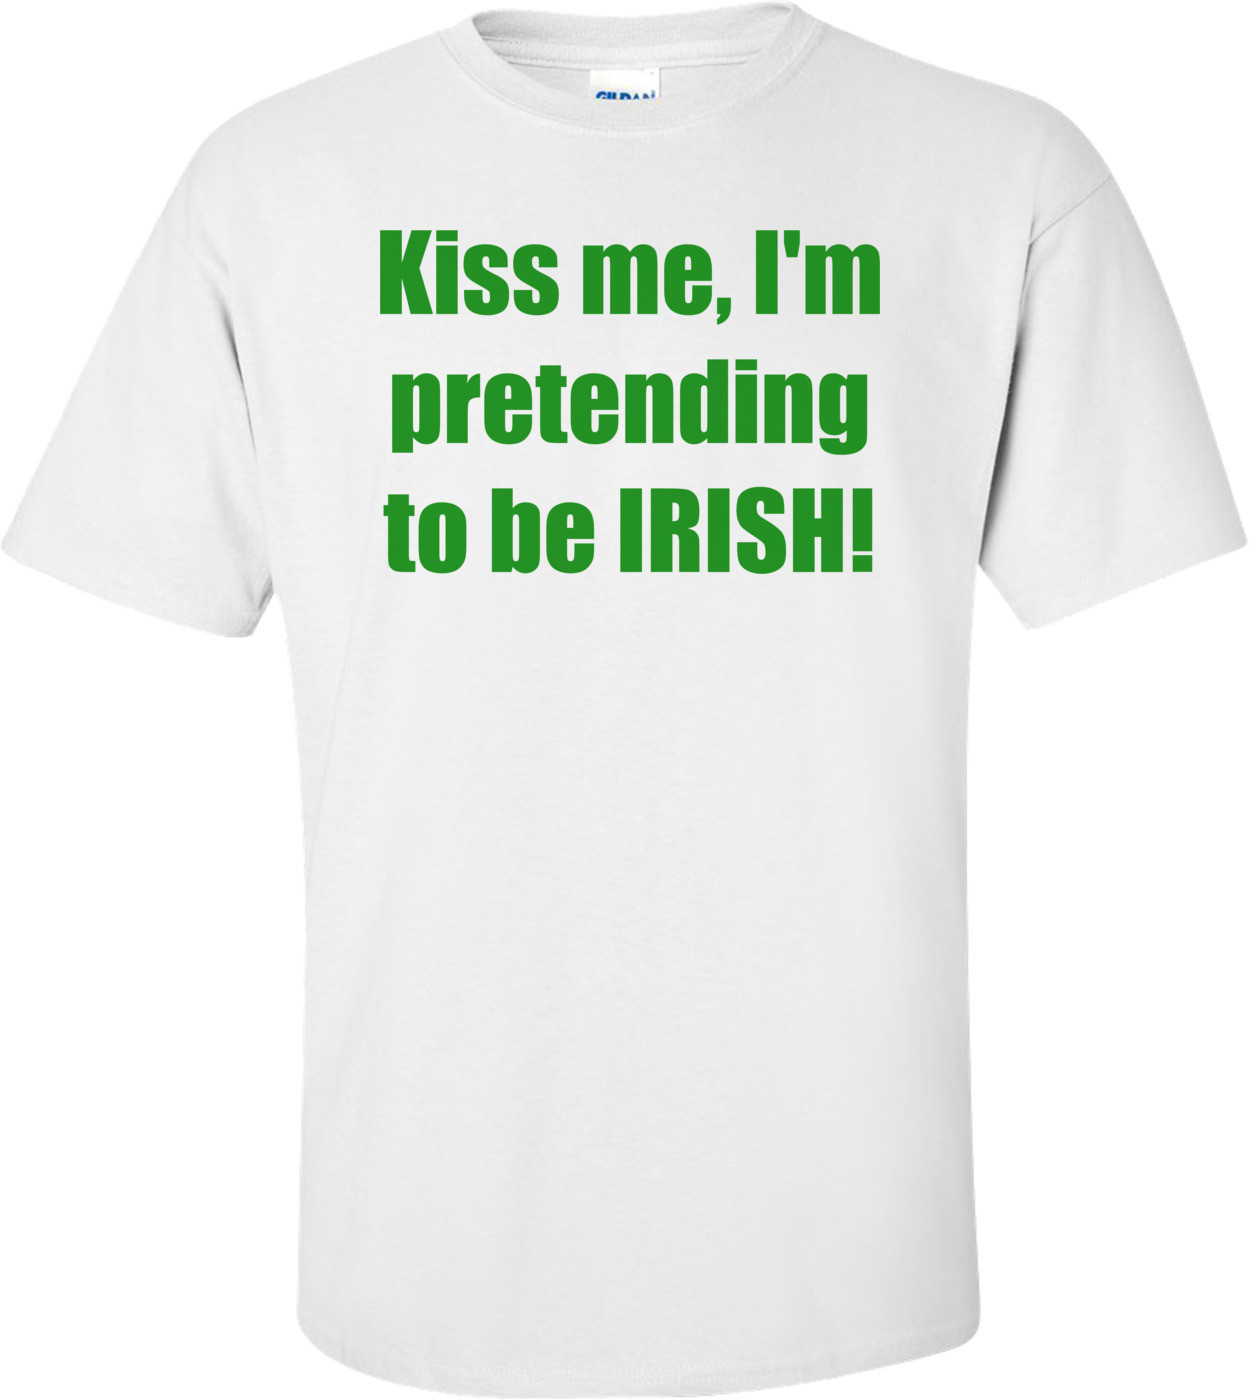 Kiss me, I'm pretending to be IRISH! Shirt